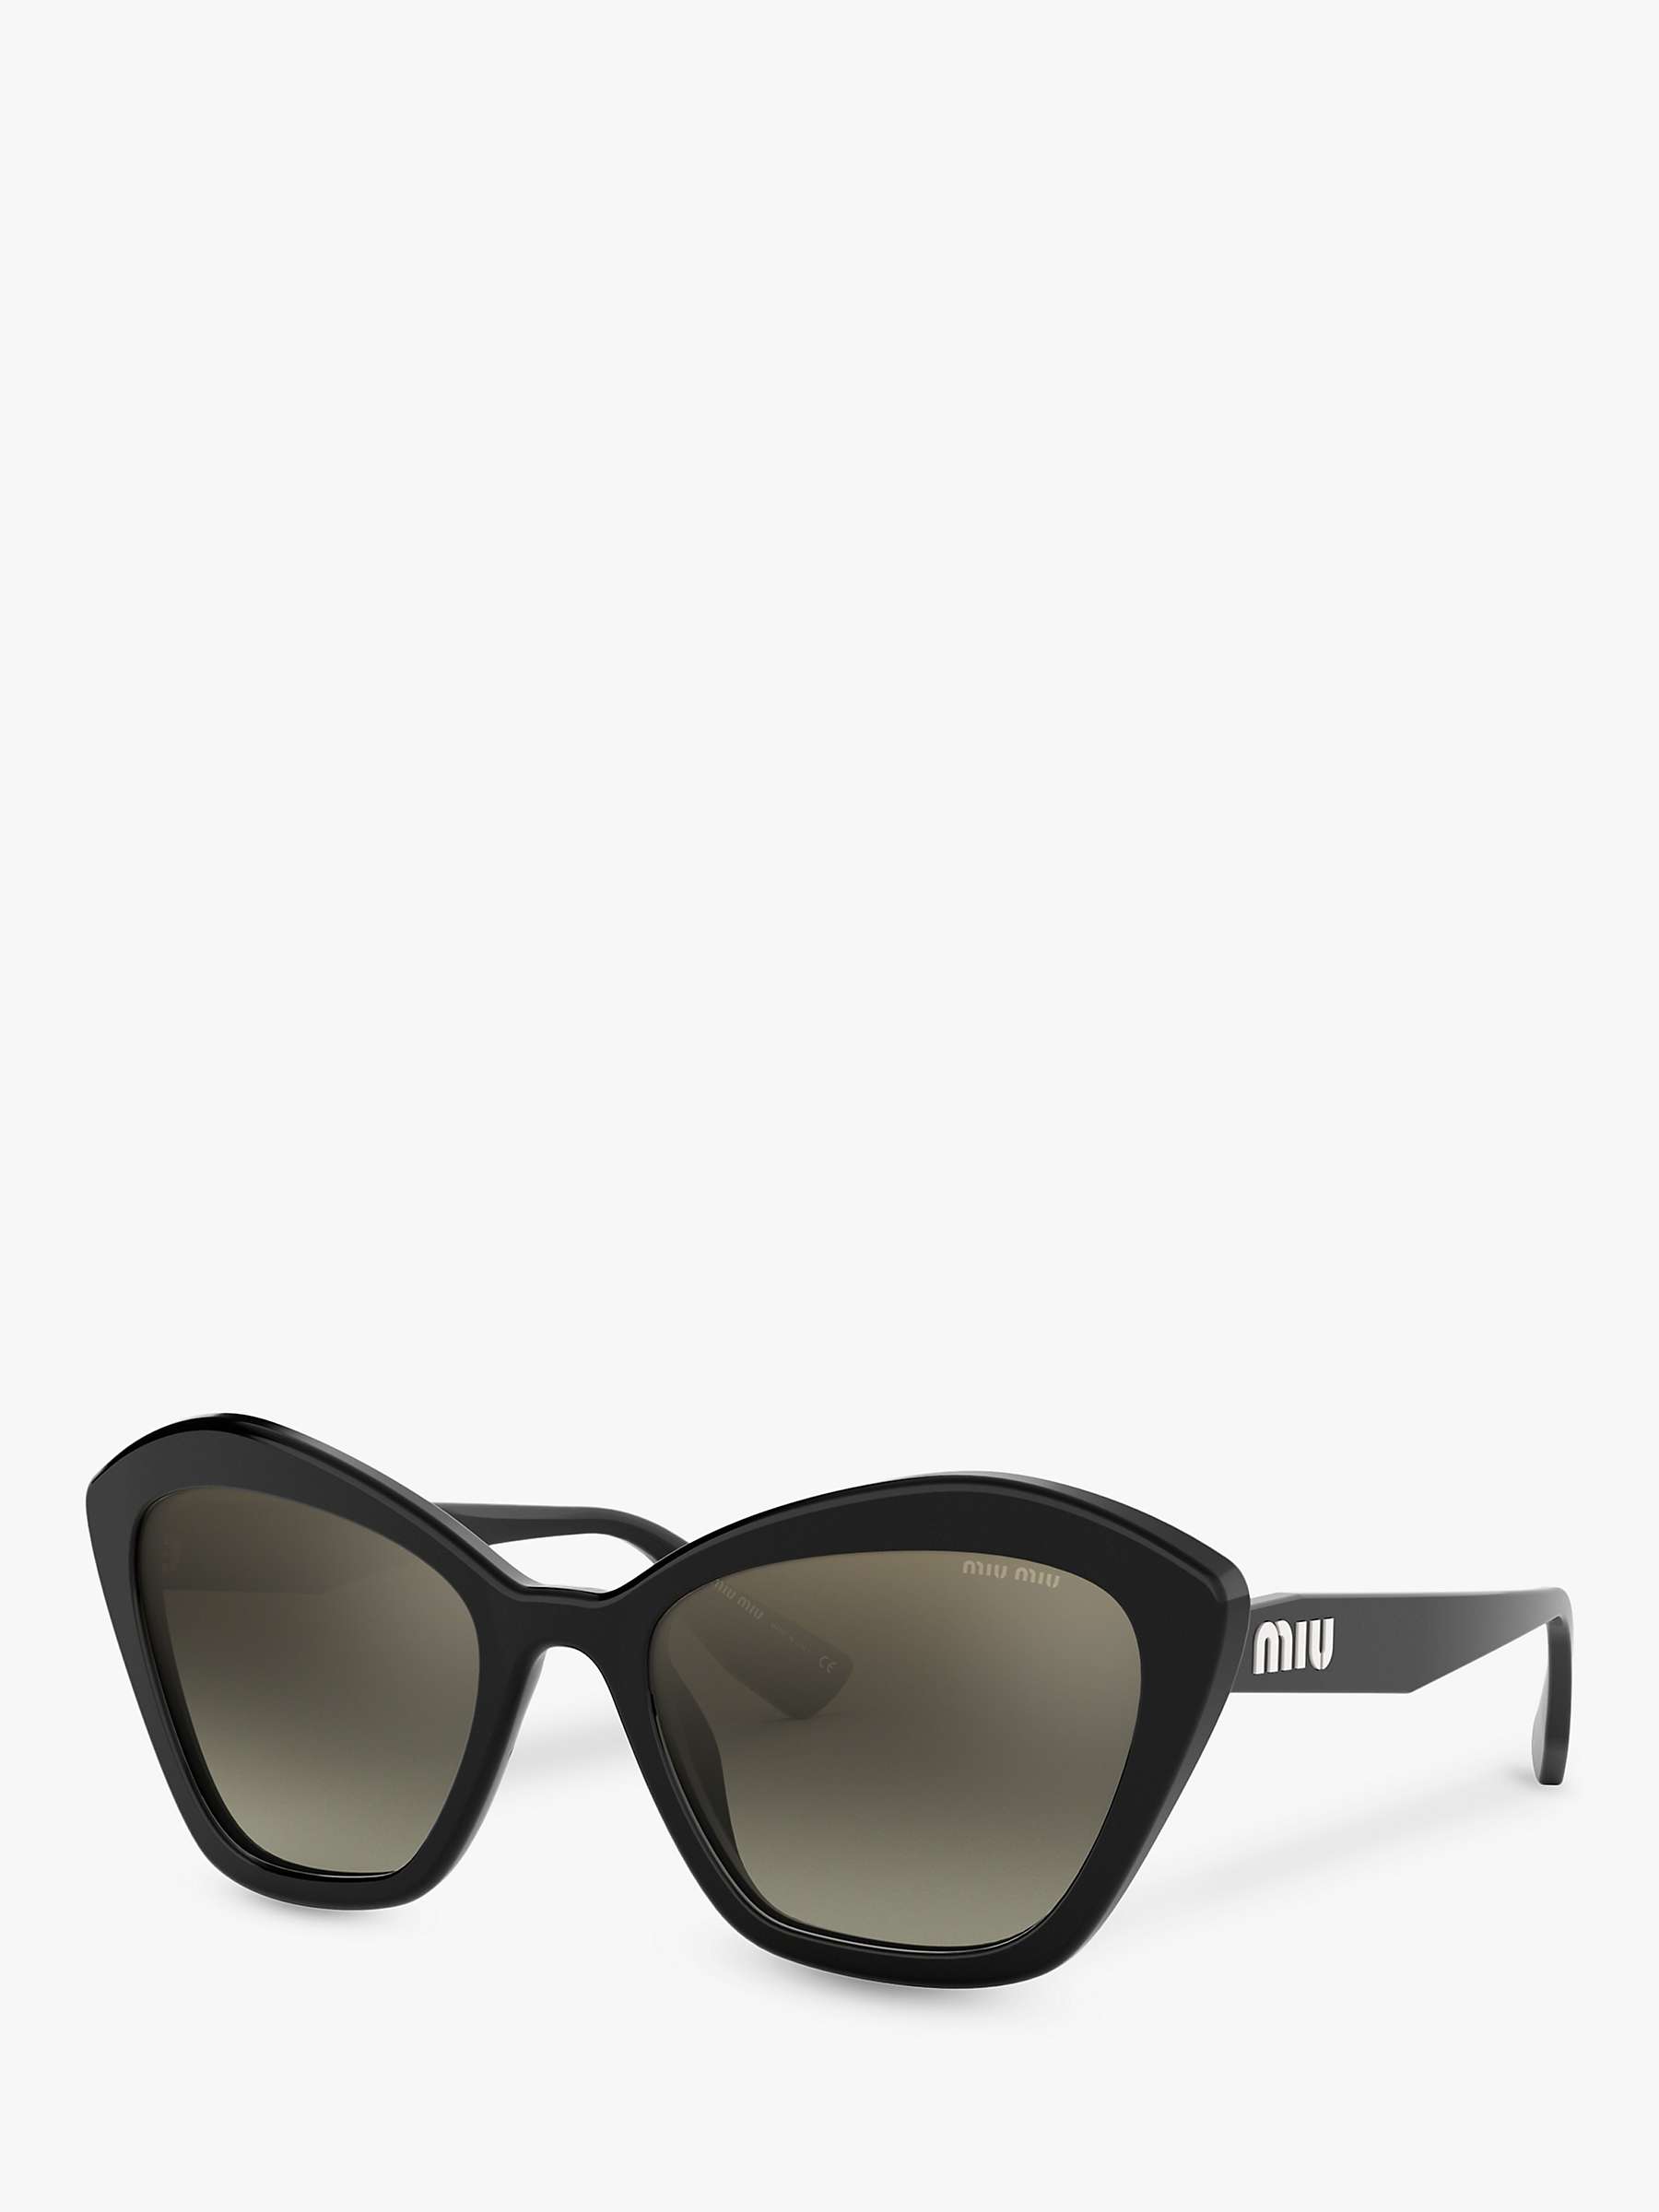 Buy Miu Miu MU 05US Women's Cat's Eye Sunglasses, Black/Mirror Silver Online at johnlewis.com